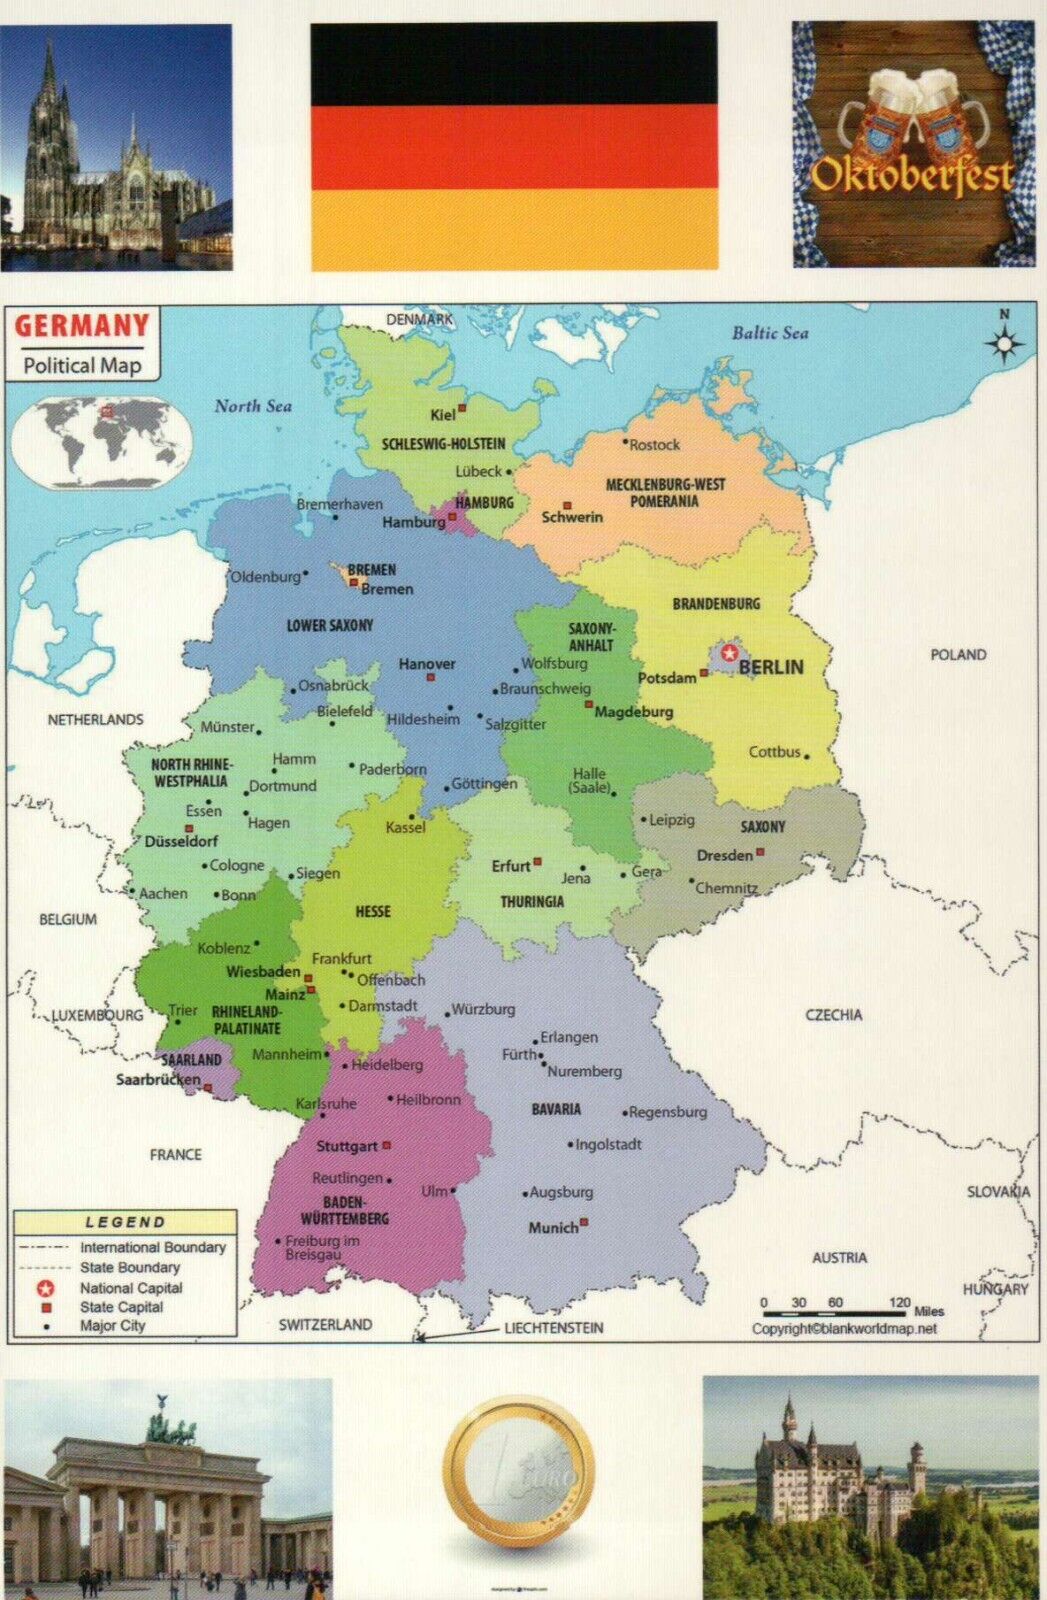 Map of Germany, Flag, Euro, Oktoberfest, Brandenburg Gate etc. - Modern Postcard